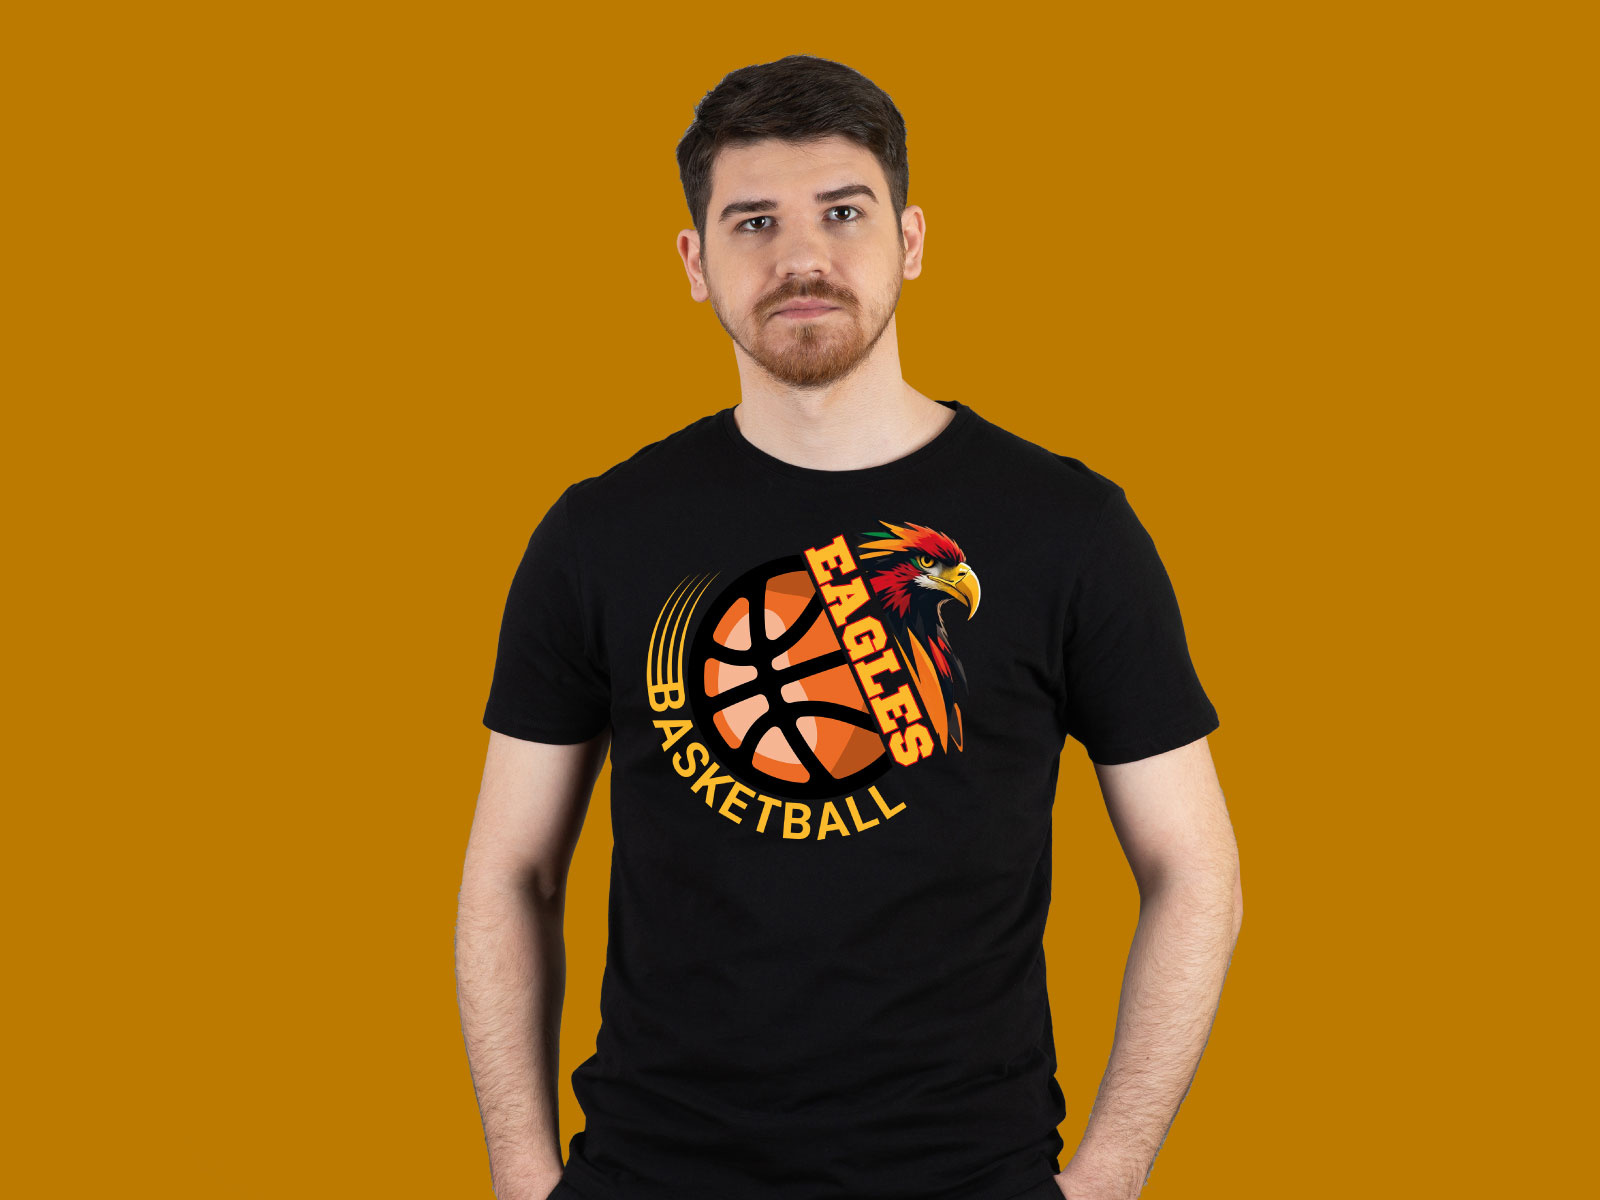 Eagles Basketball T-Shirt Design by Md.shahabuddin on Dribbble